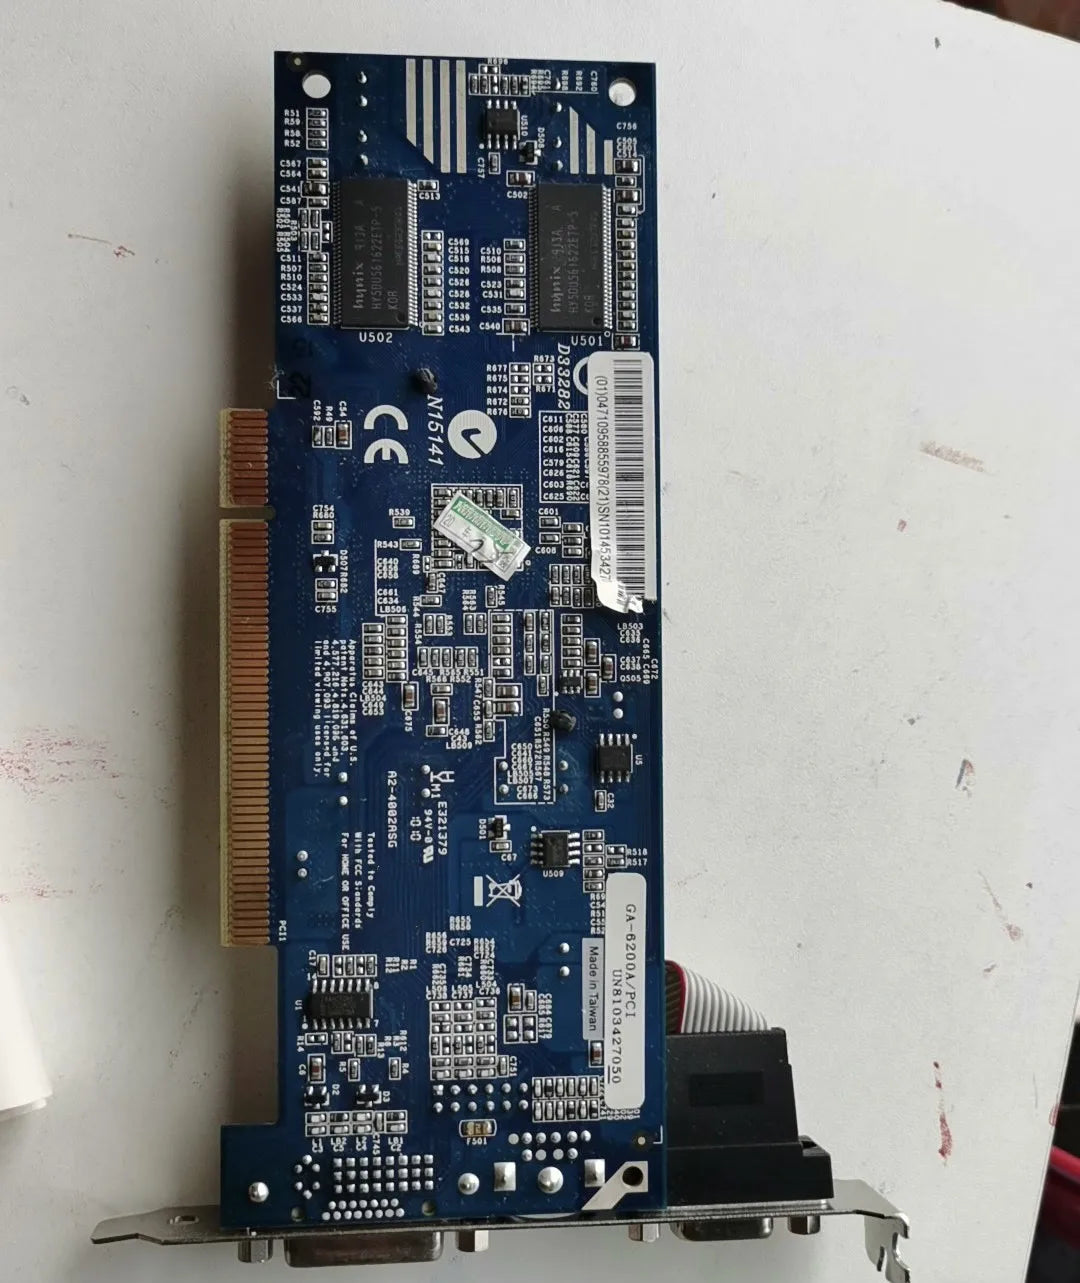 GA-6200A PCI Server Old Graphics Card 6200